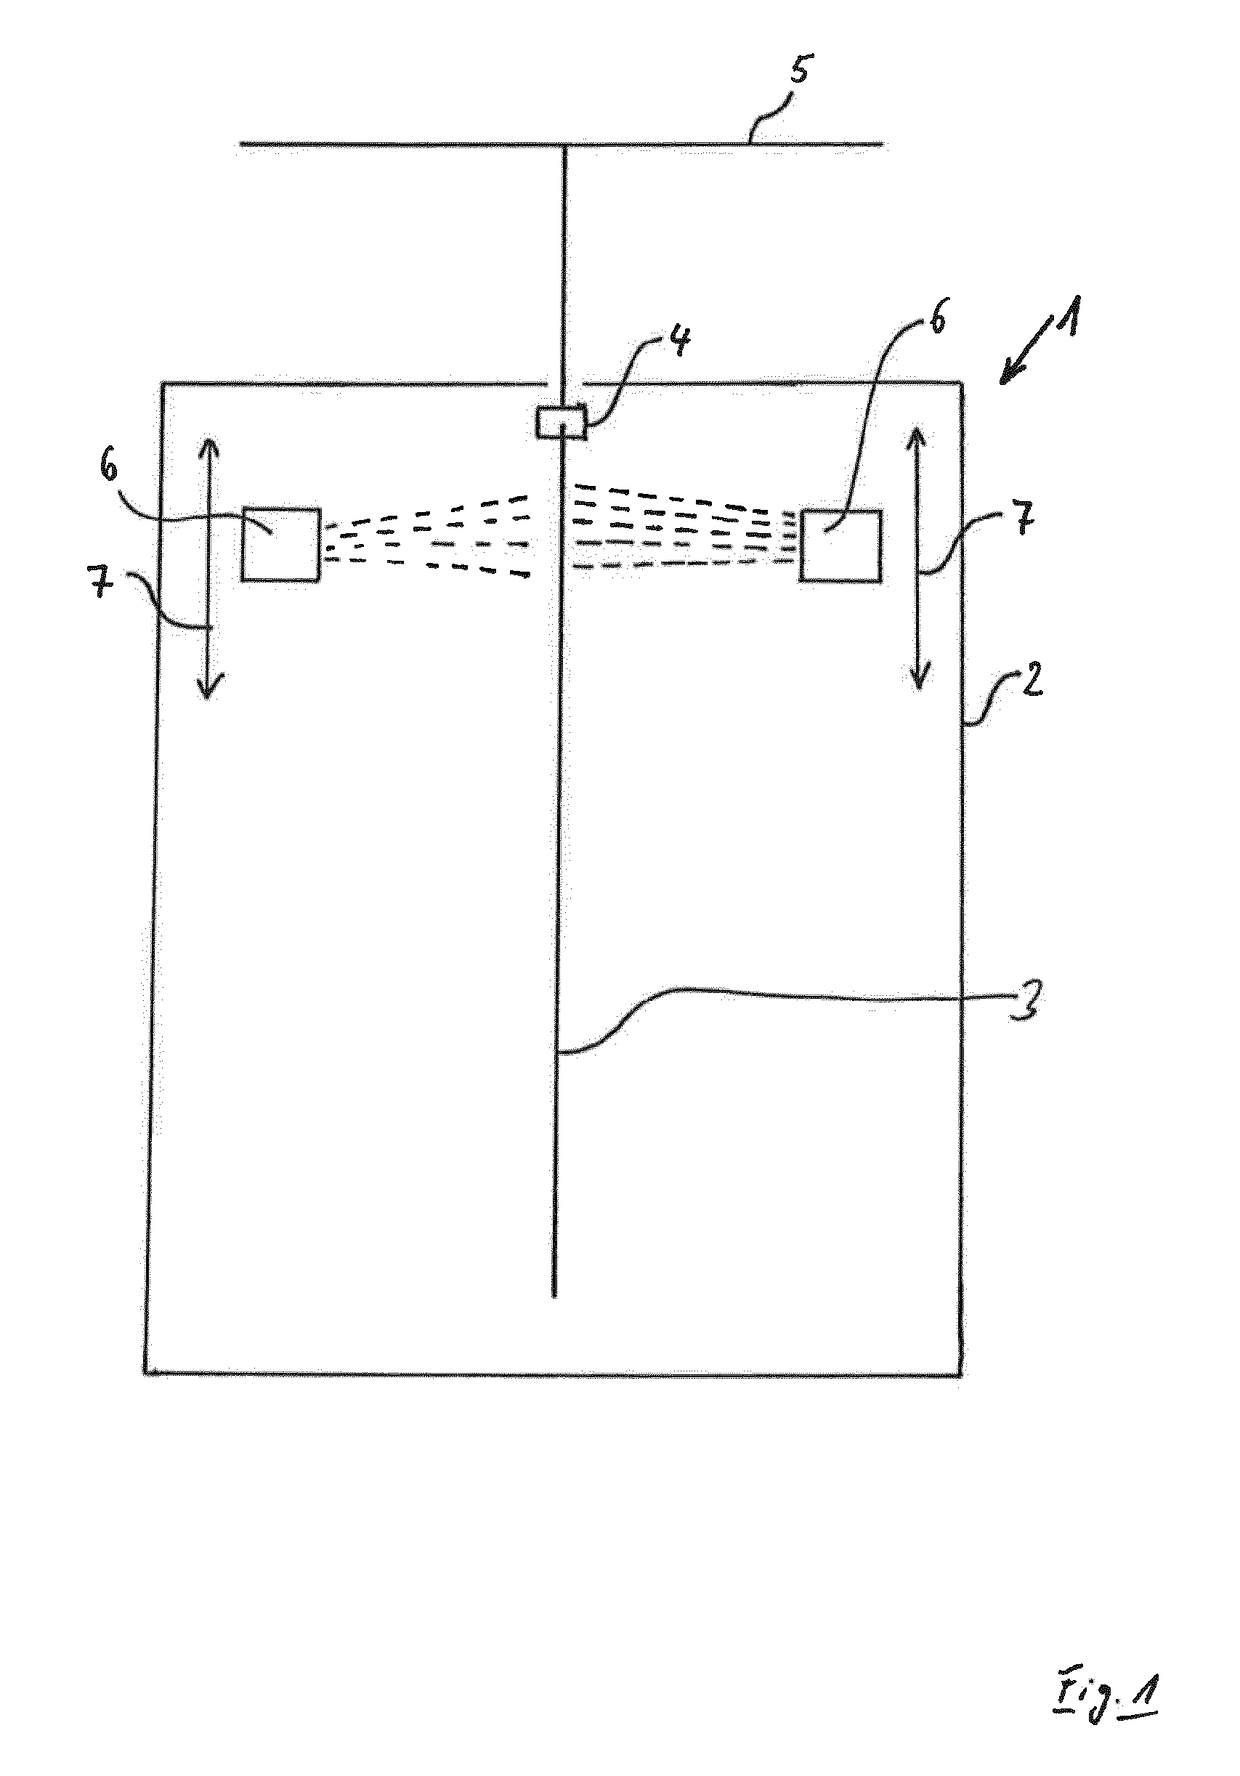 Method for intercooling sheet steel